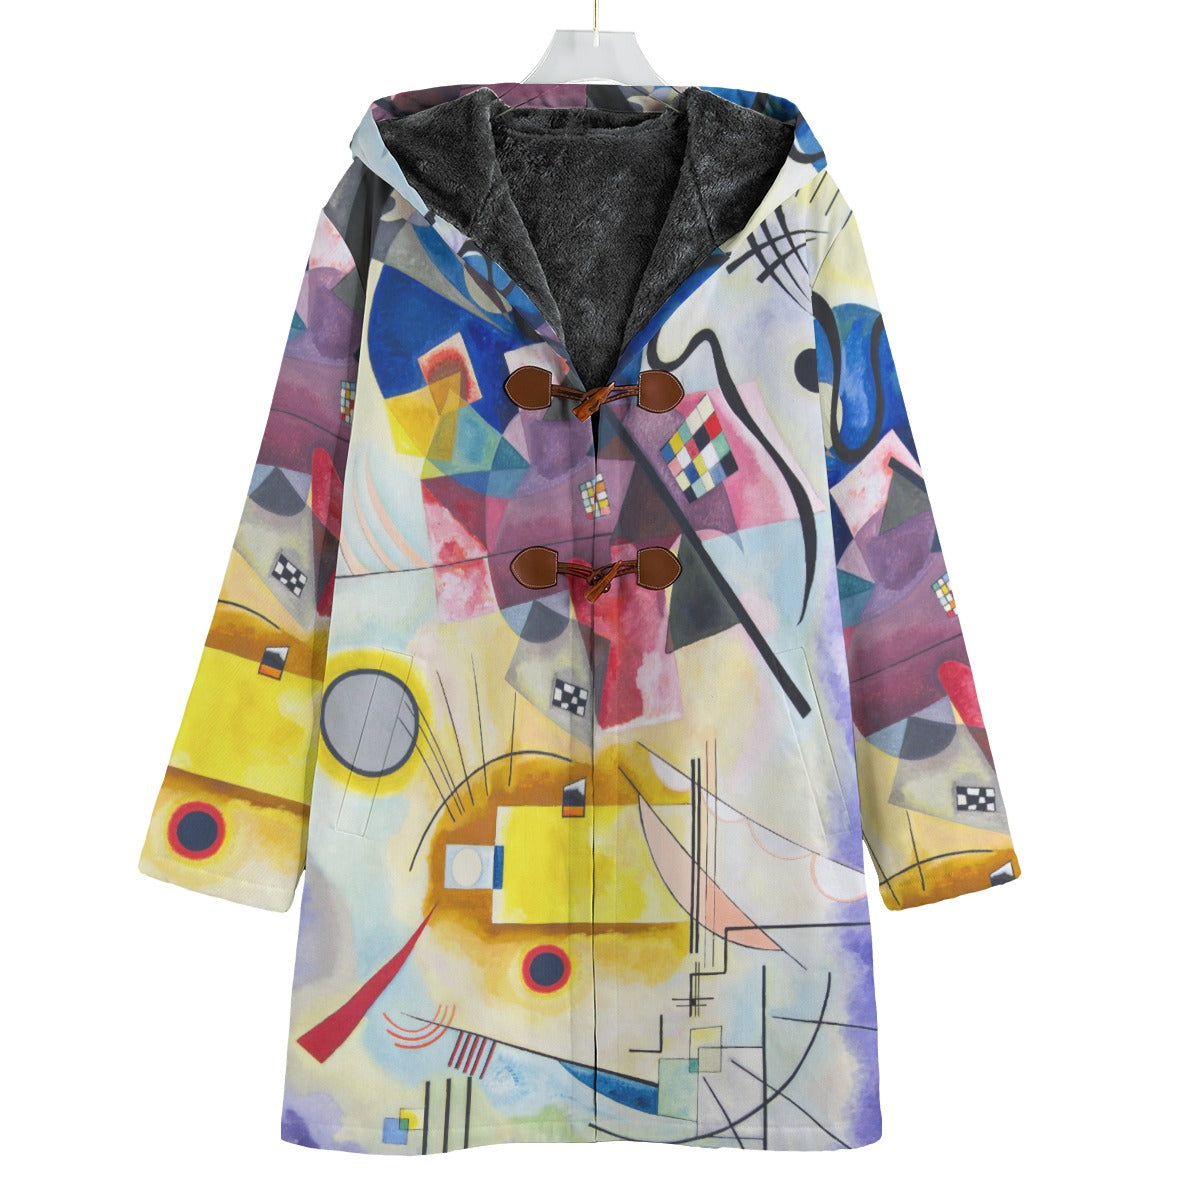 Vibrant abstract fleece trench coat